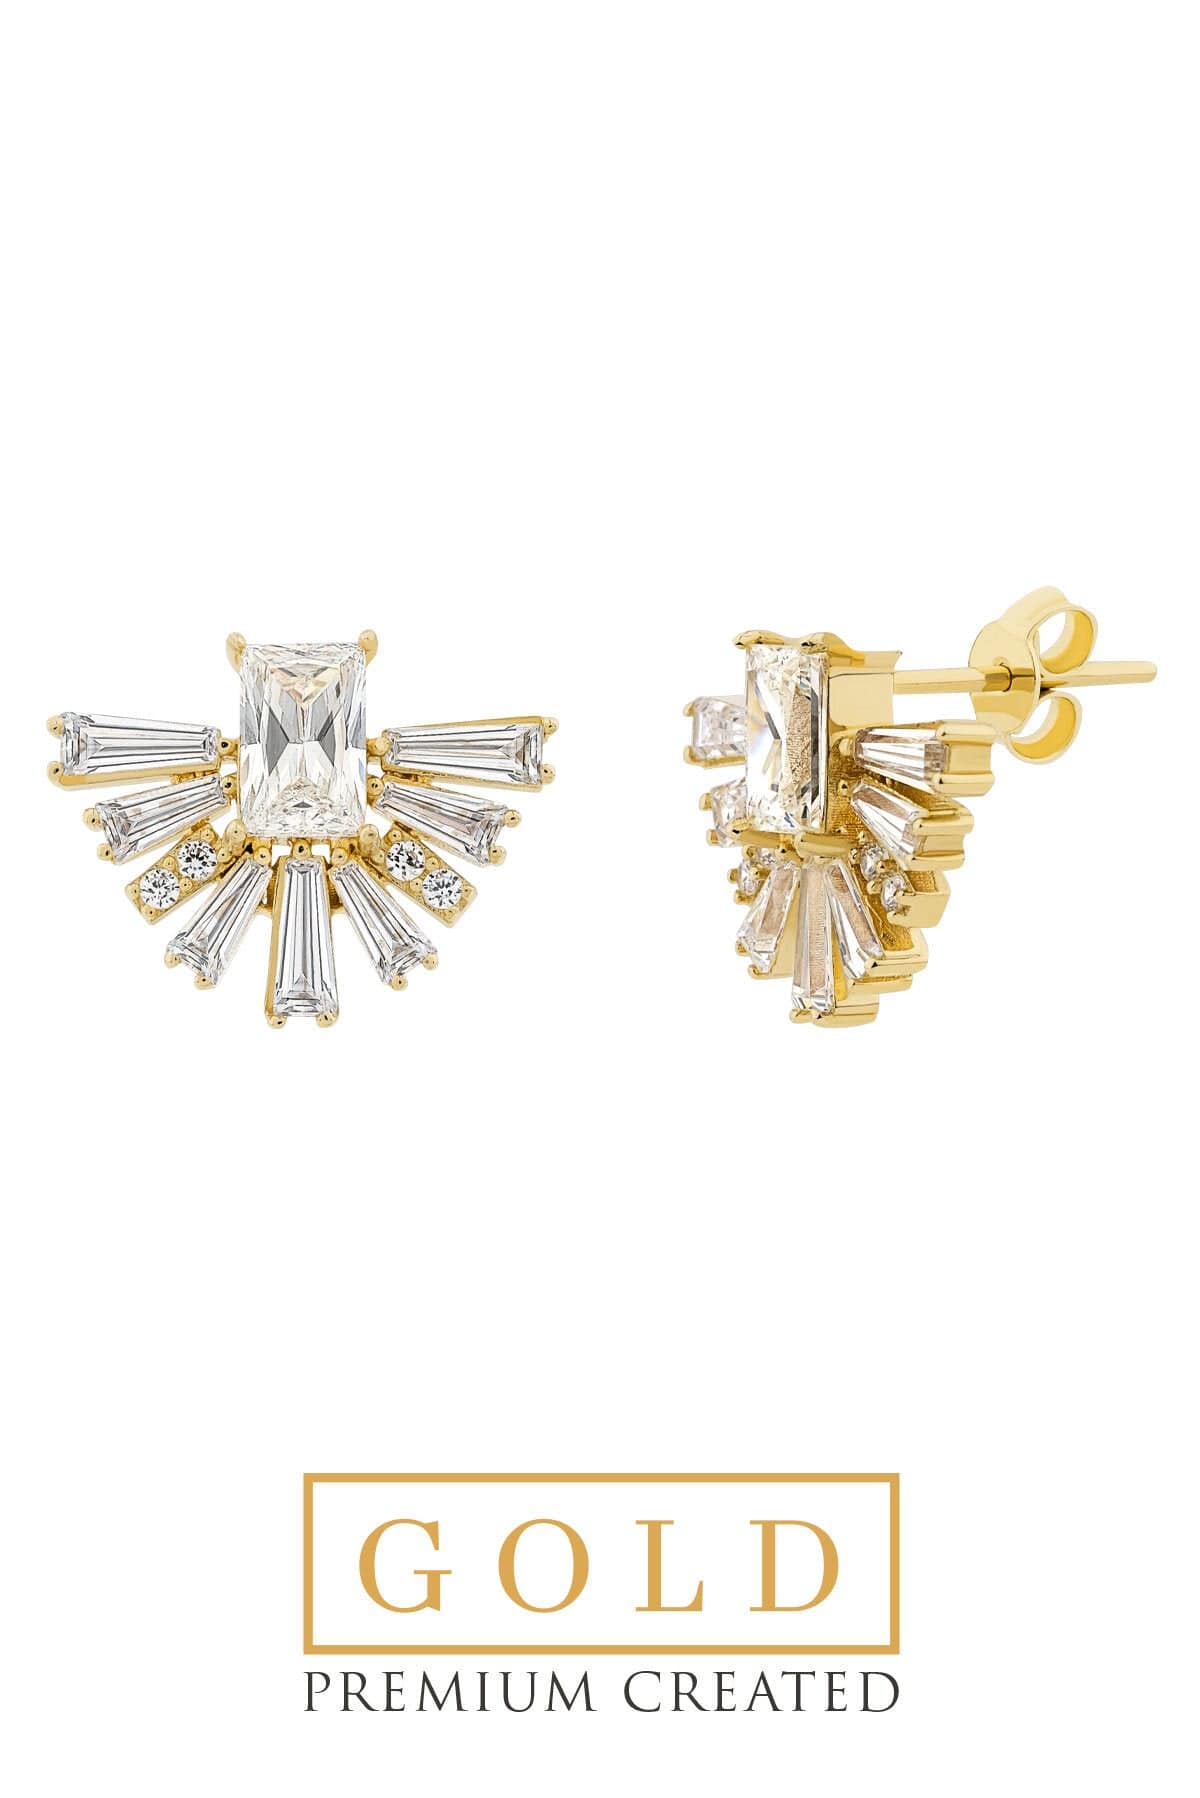 14 K Gold White Gold Certified Premium Created Stone Baguette Earrings SoChic